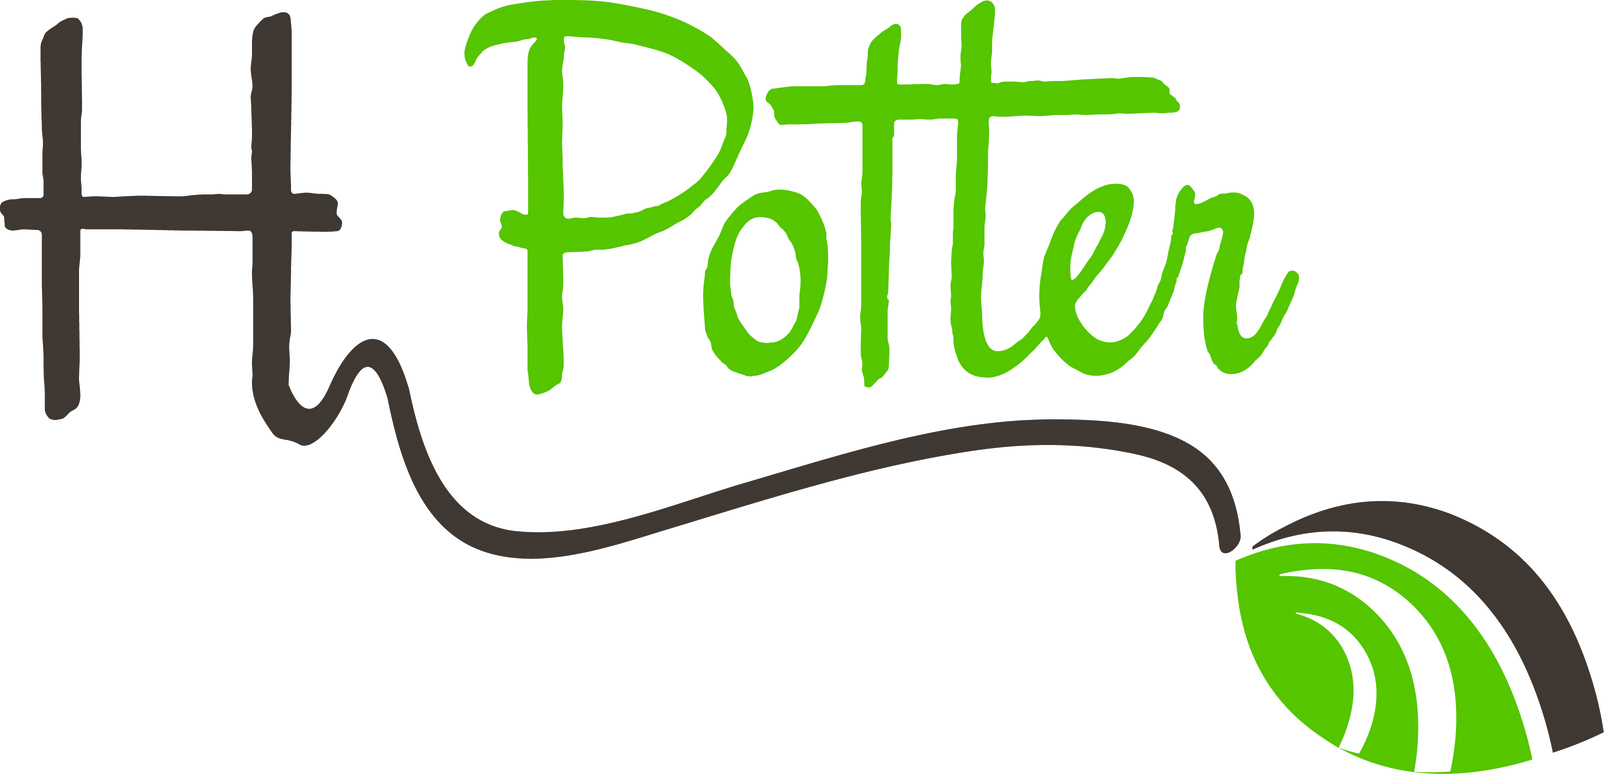 H Potter Premium Garden Decor Trellises, Planters, Arbors, Terrariums